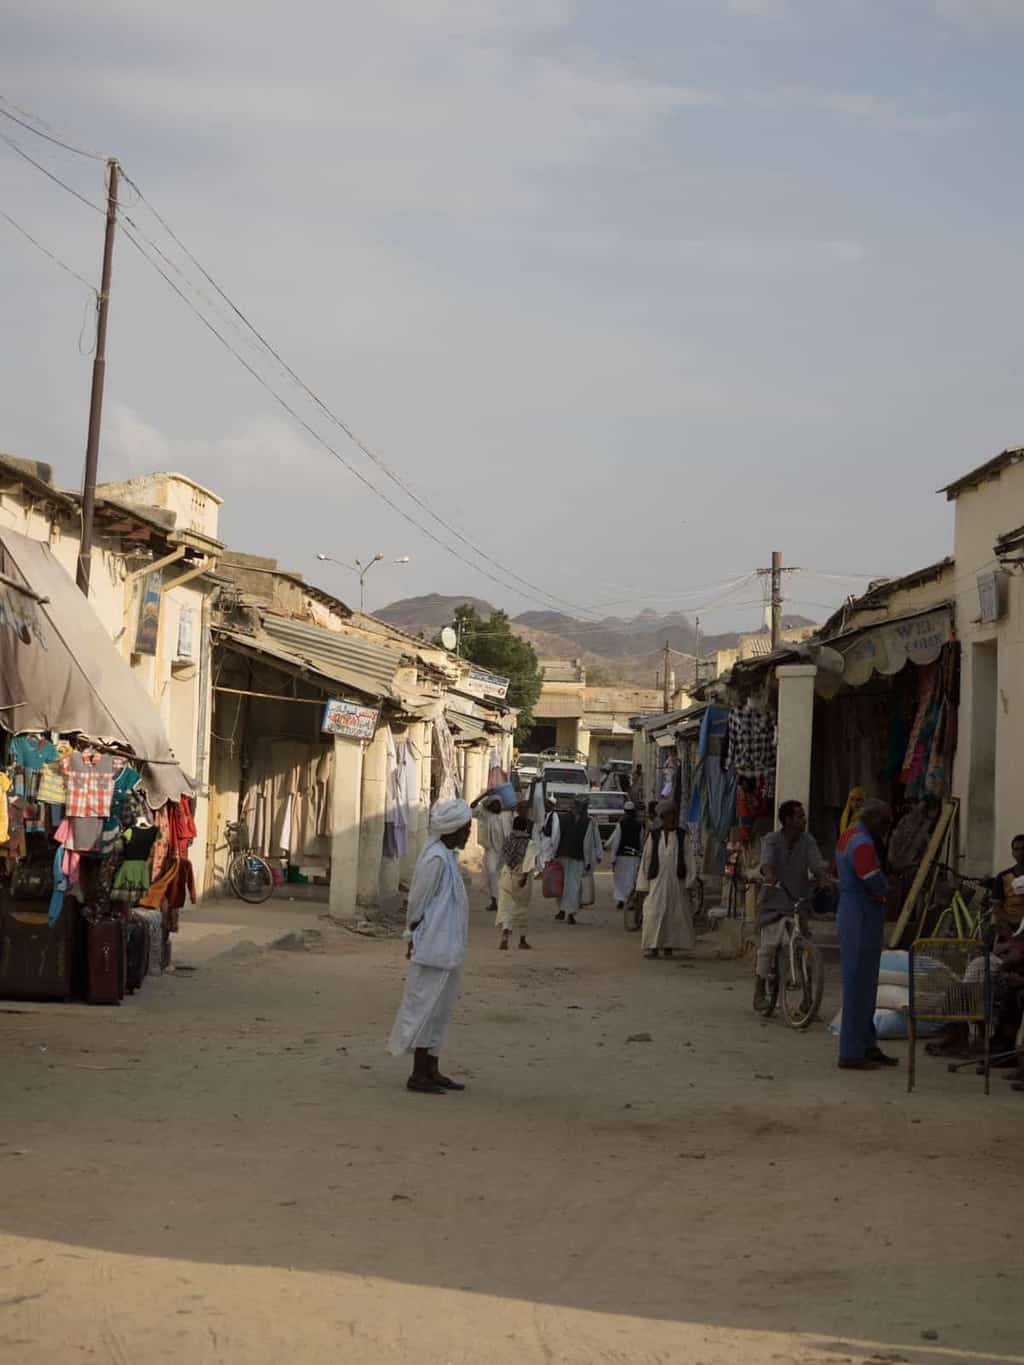 Keren street in Eritrea